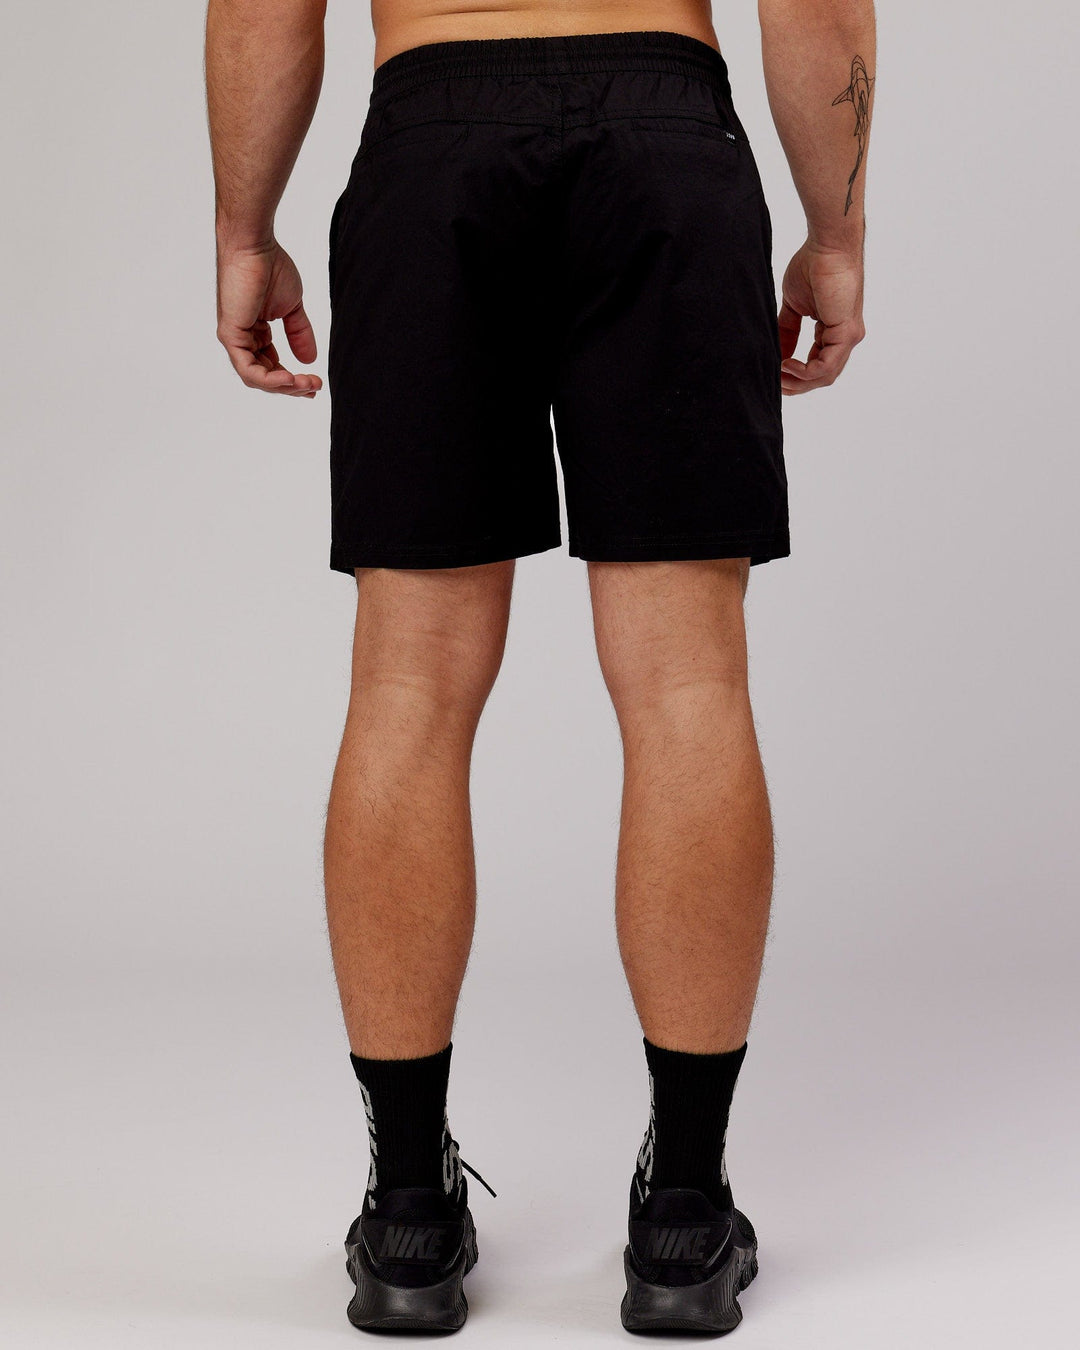 Daily Shorts - Black-Black